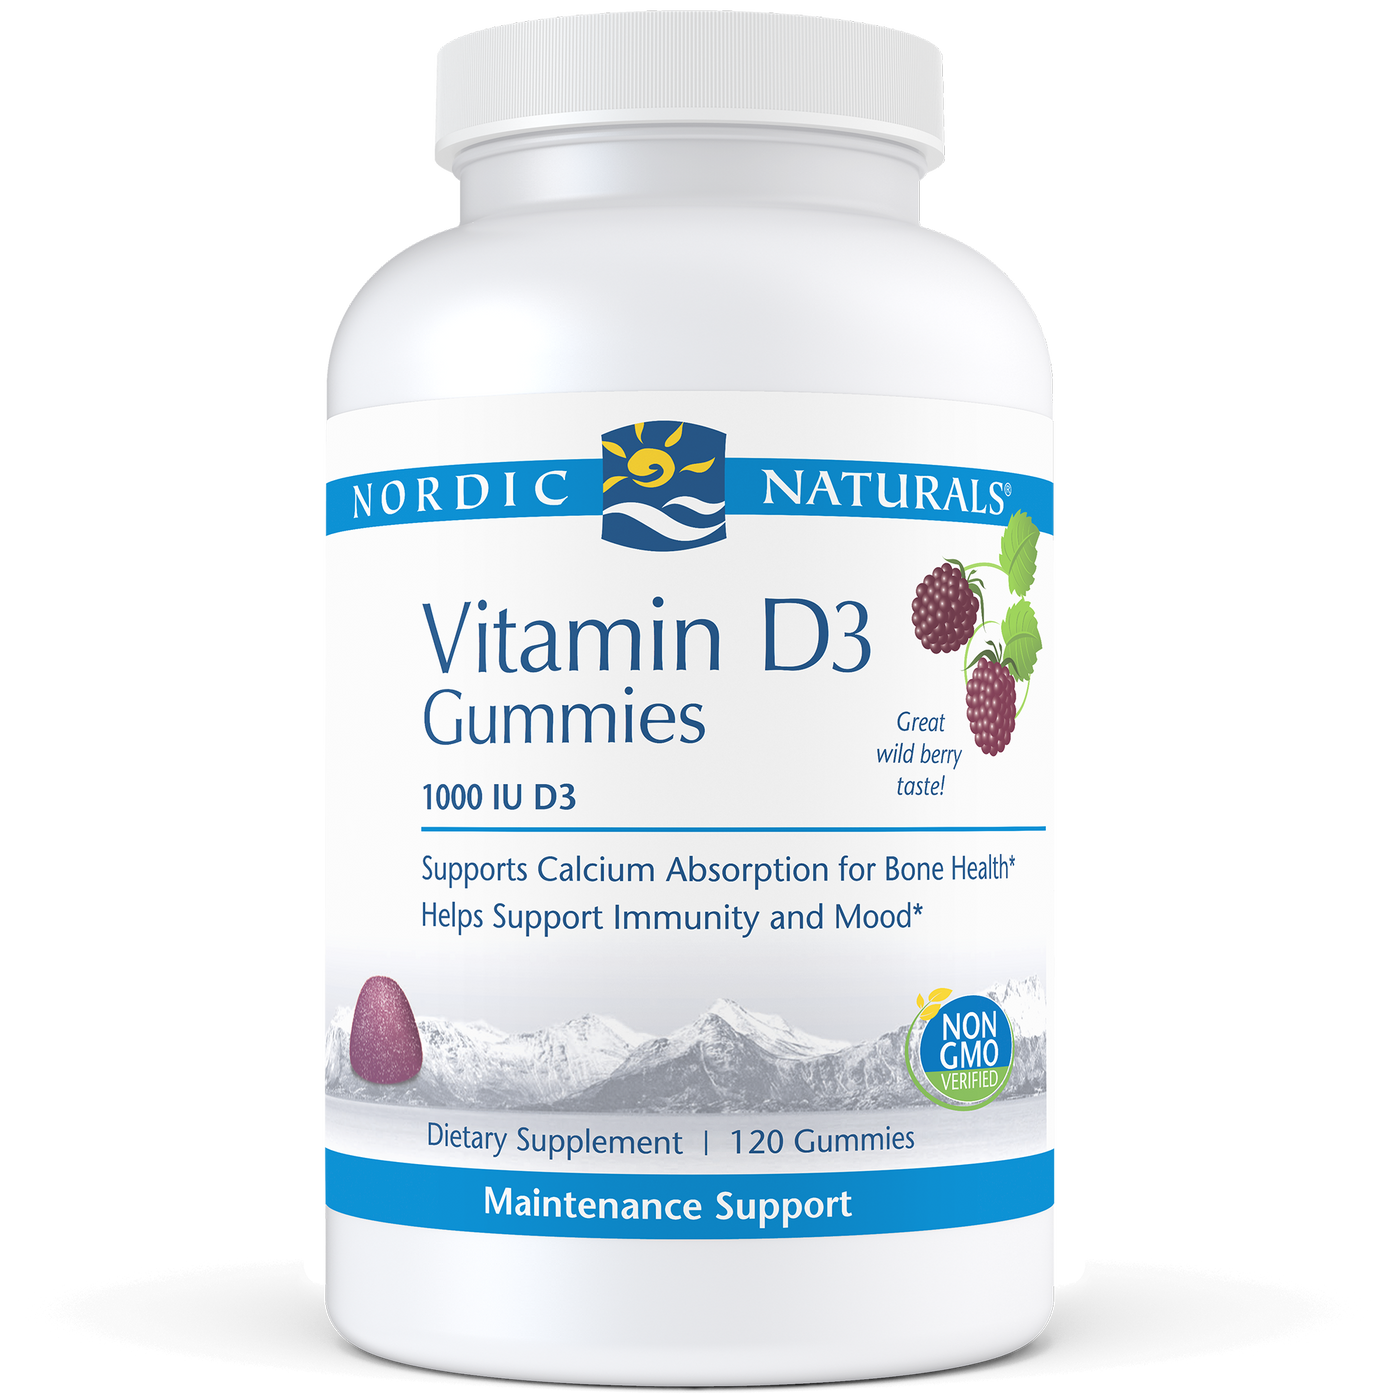 Vitamin D3 120 Gummies Curated Wellness